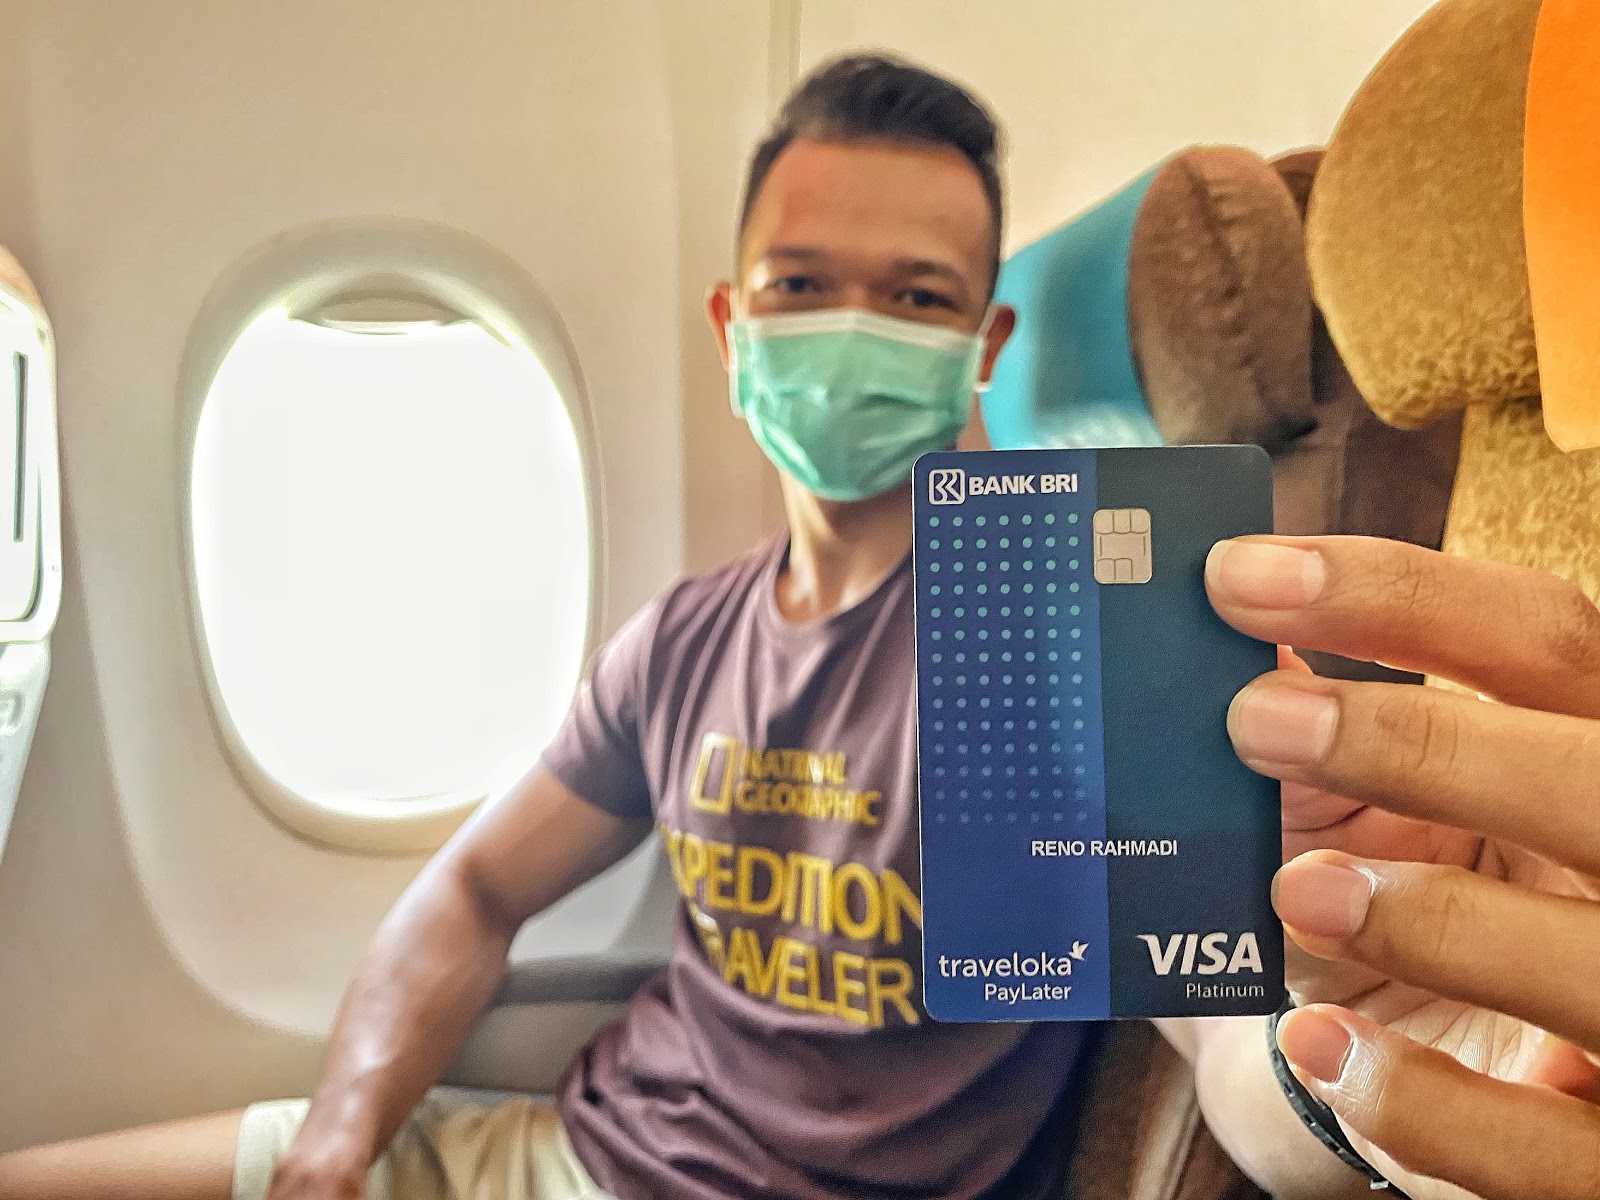 Thẻ tín dụng PayLater của Traveloka. Ảnh: Traveler Jakarta.